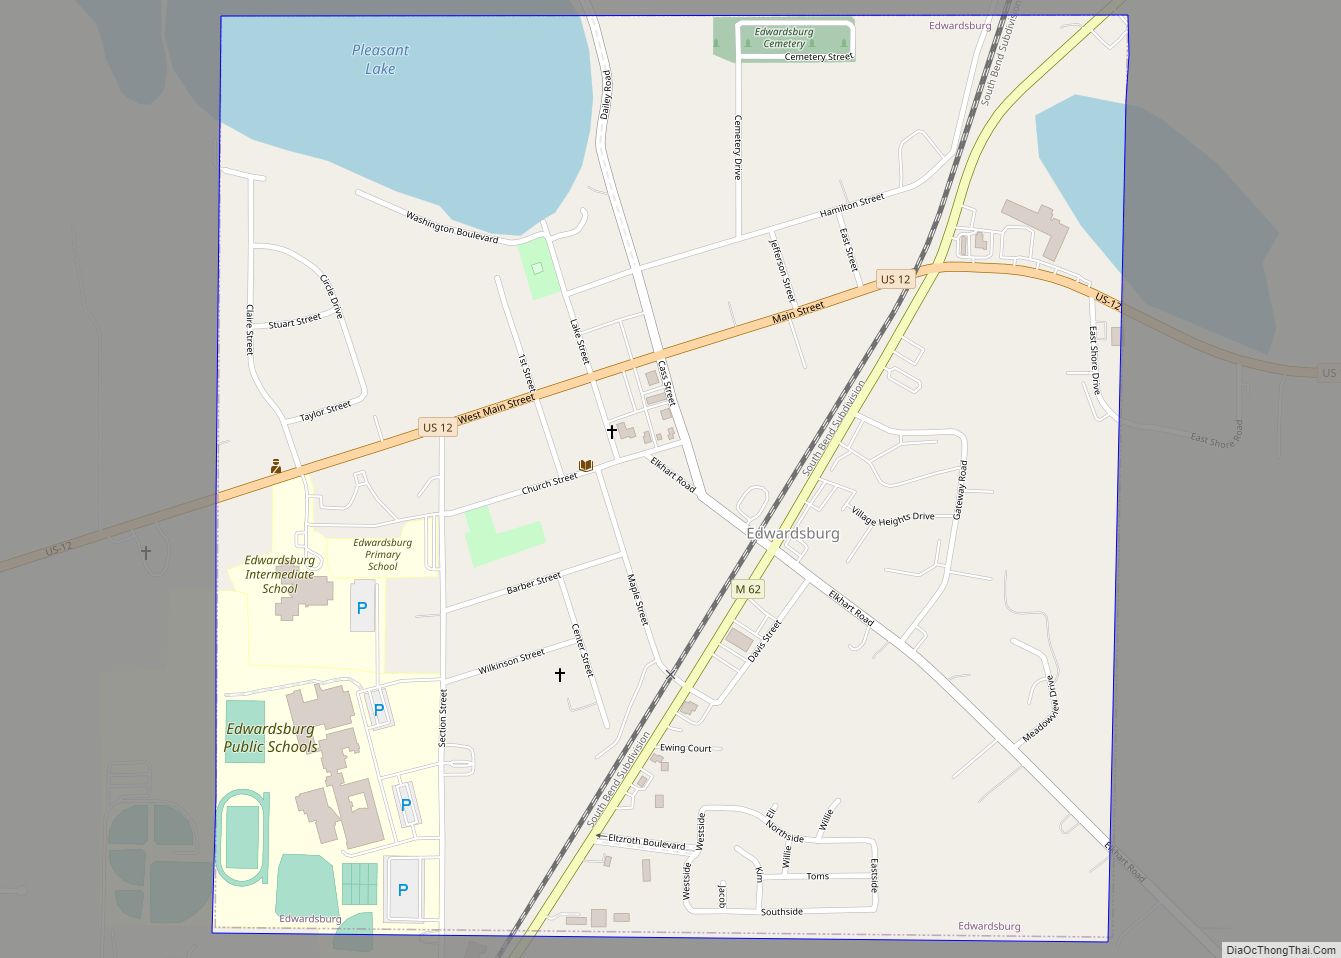 Map of Edwardsburg village